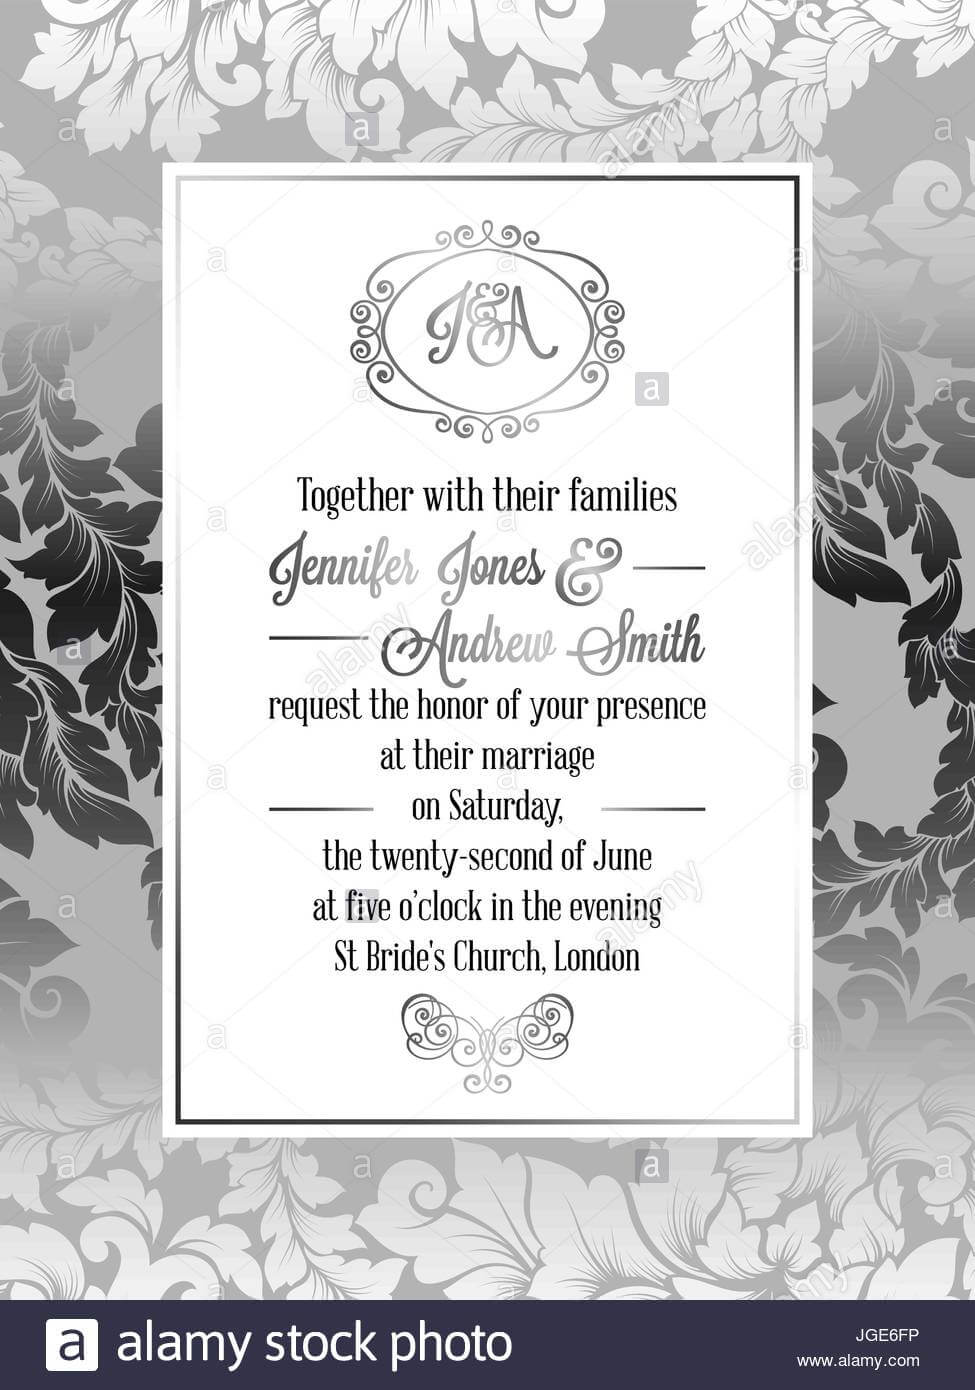 Vintage Baroque Style Wedding Invitation Card Template With Church Wedding Invitation Card Template